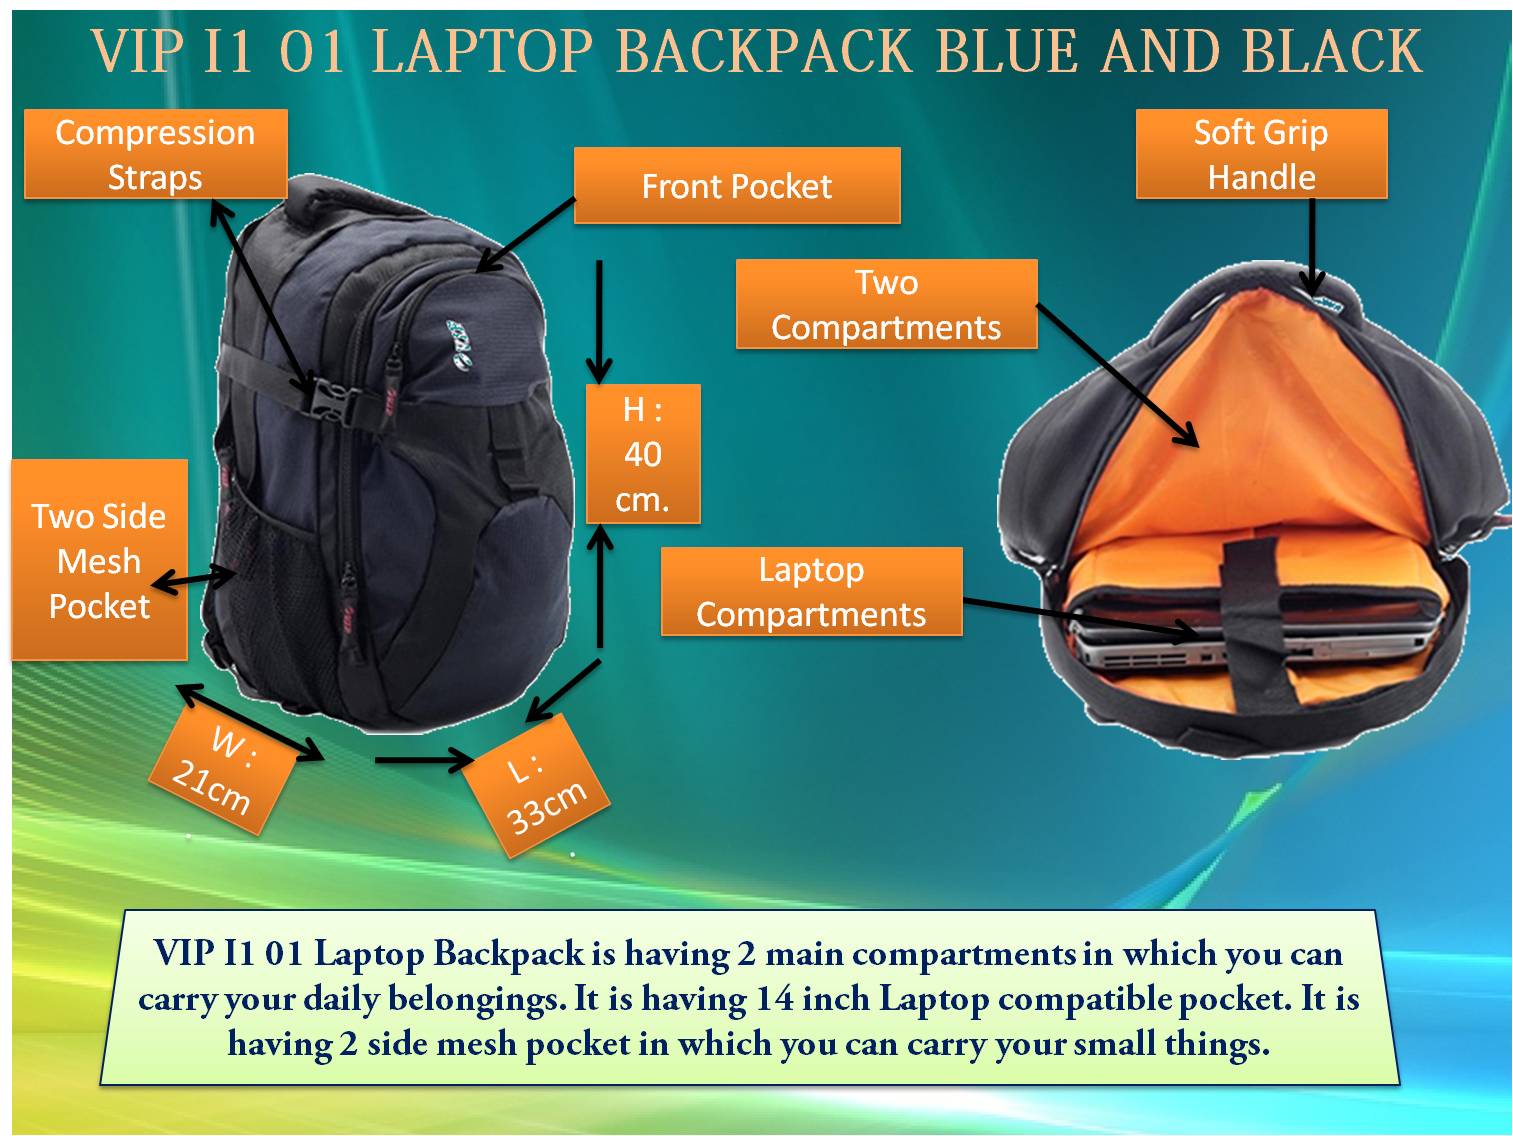 vip i1 03 laptop backpack